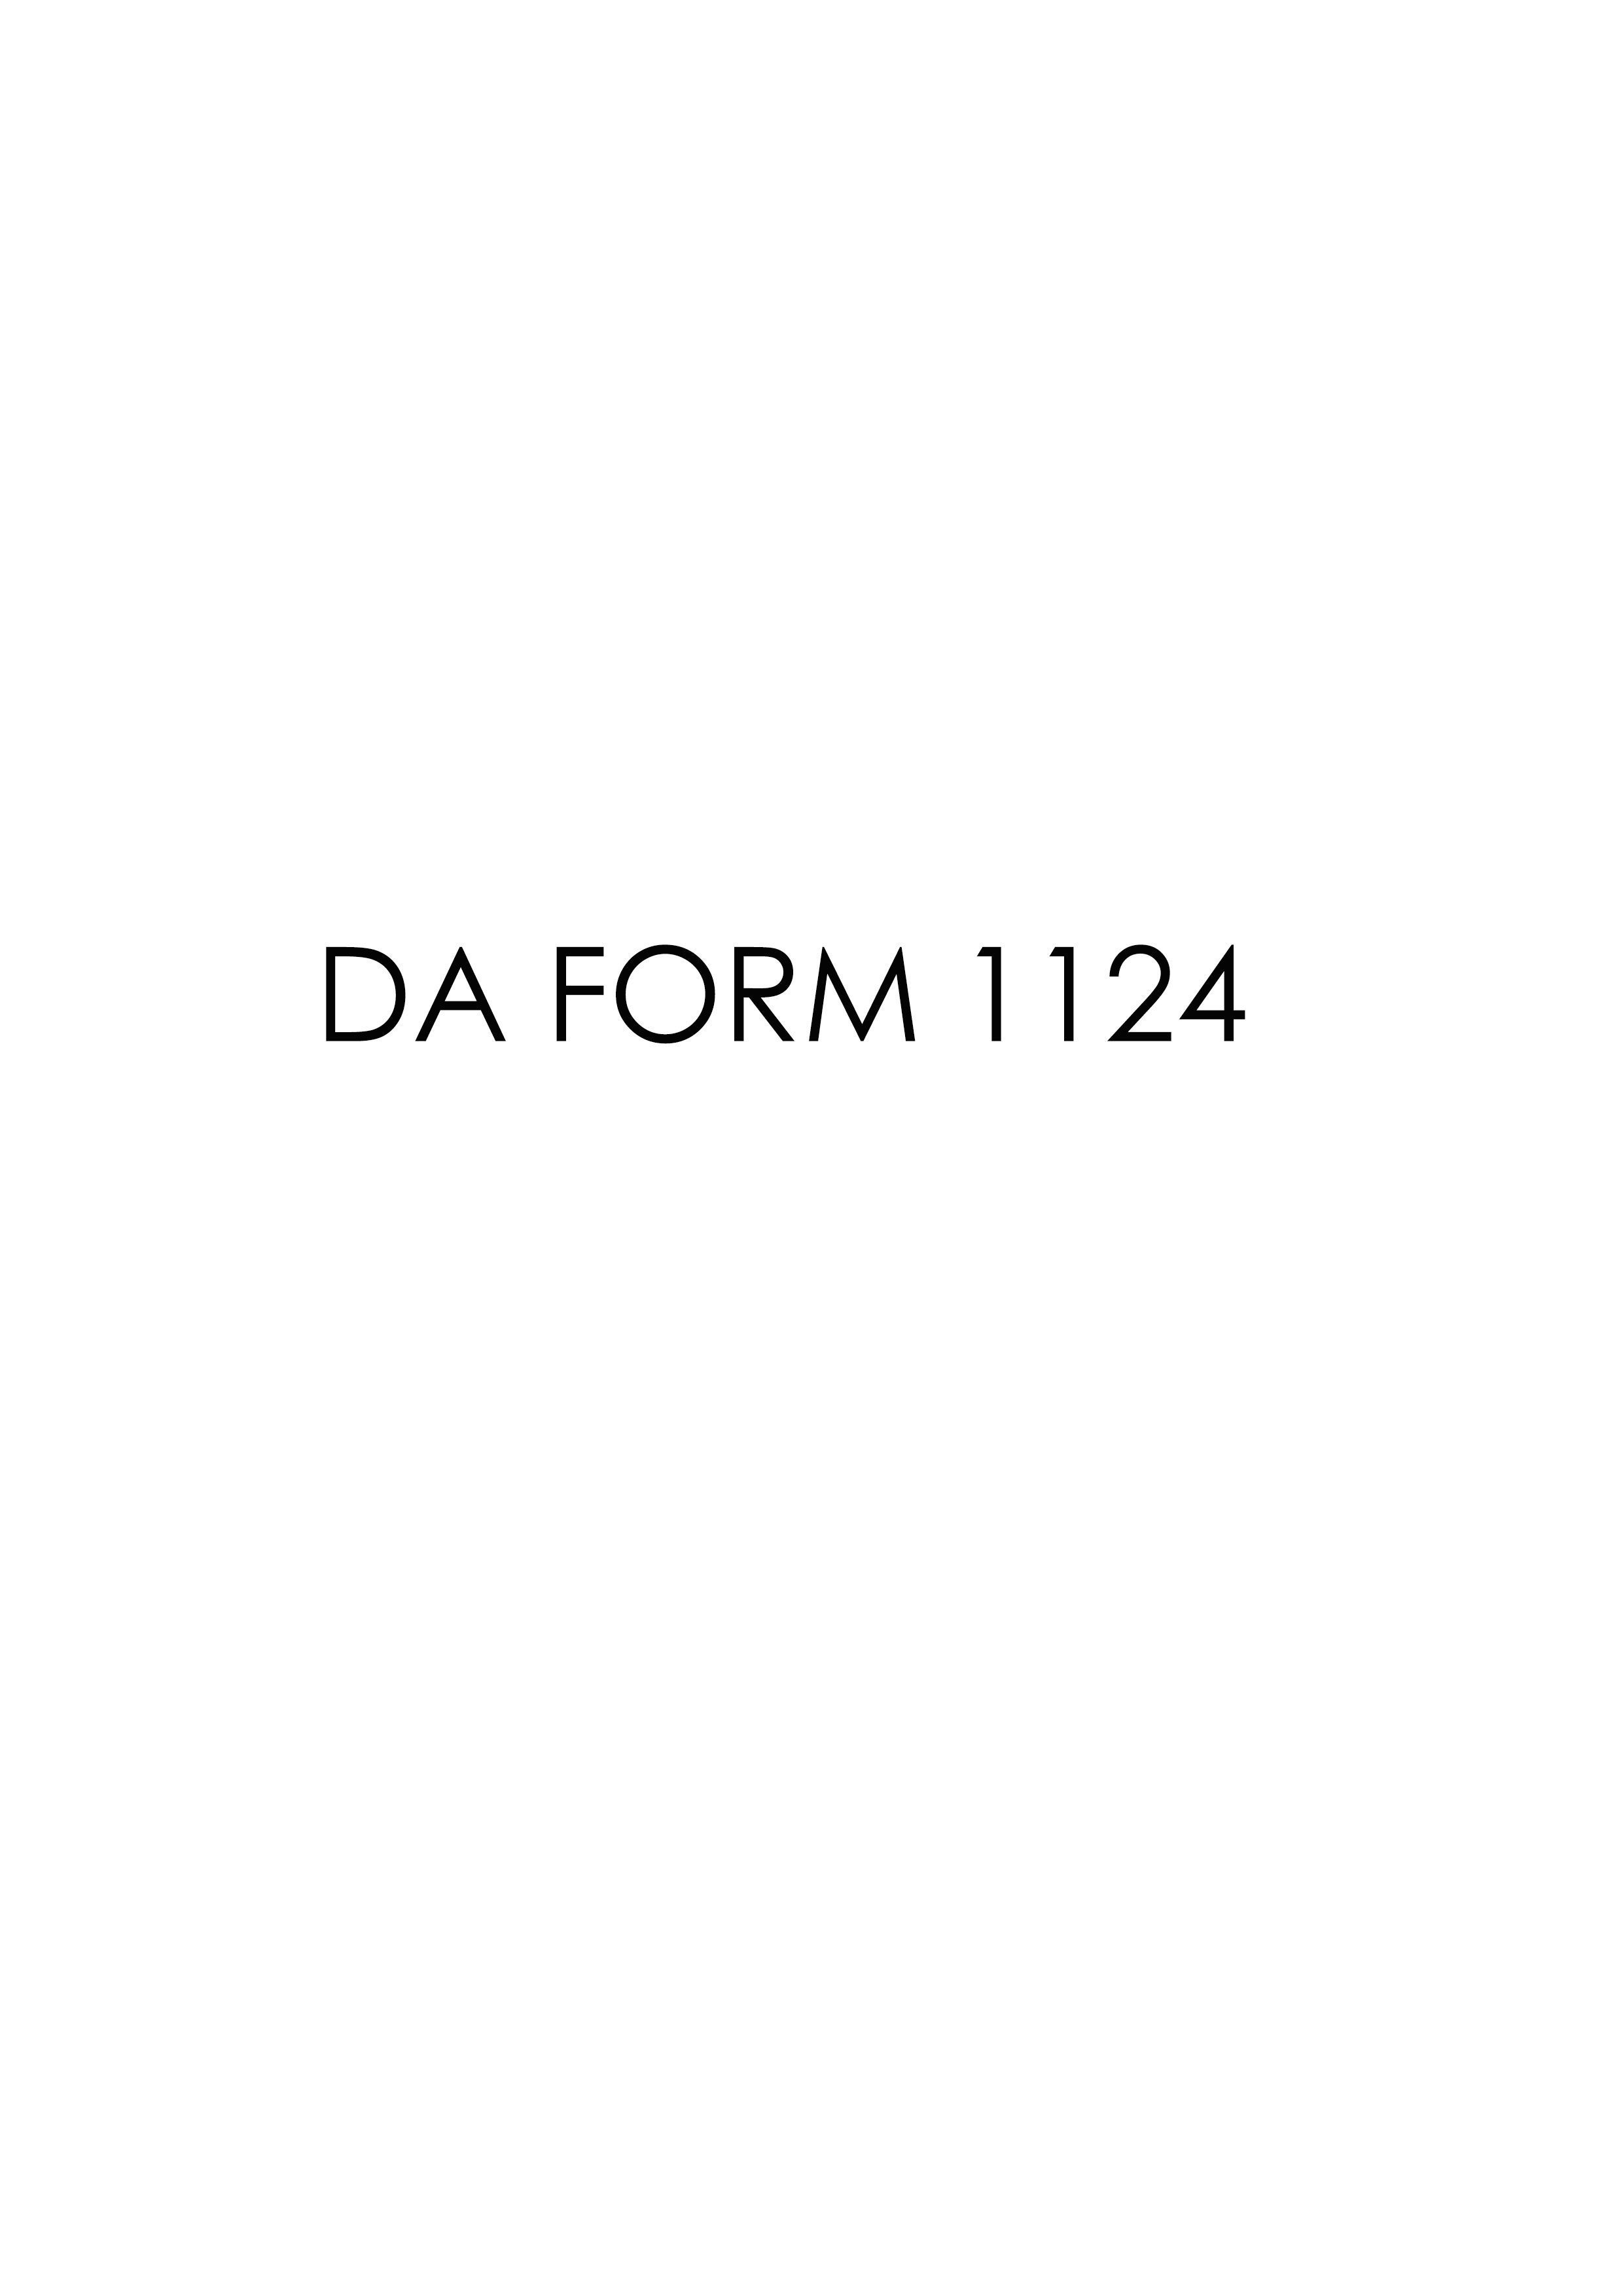 Download da 1124 Form Free